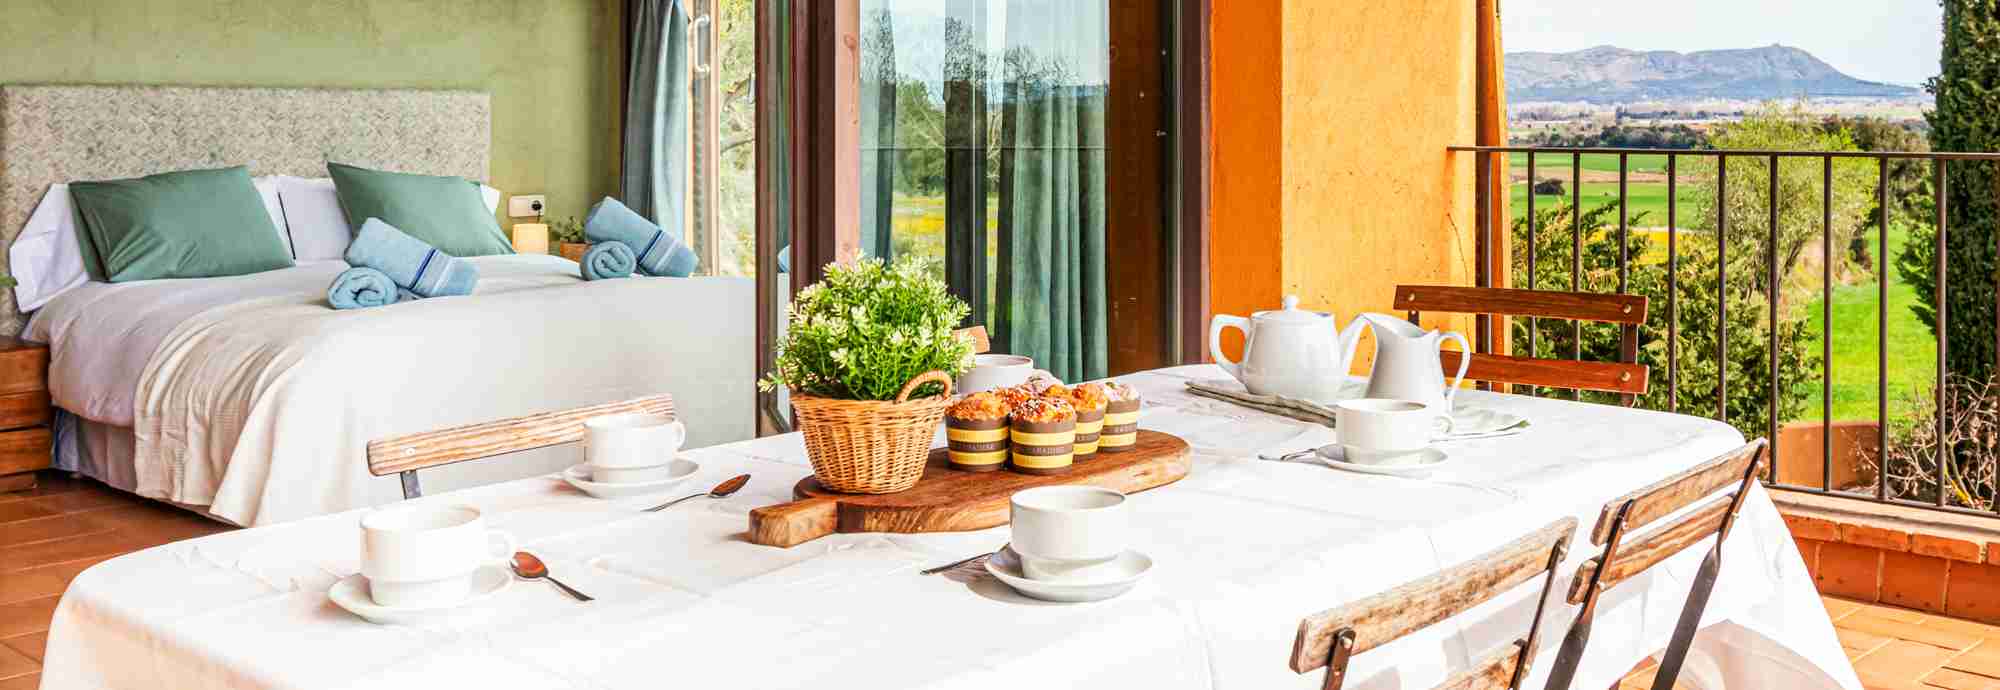 Rustic elegance: idyllic Costa Brava farmhouse getaway